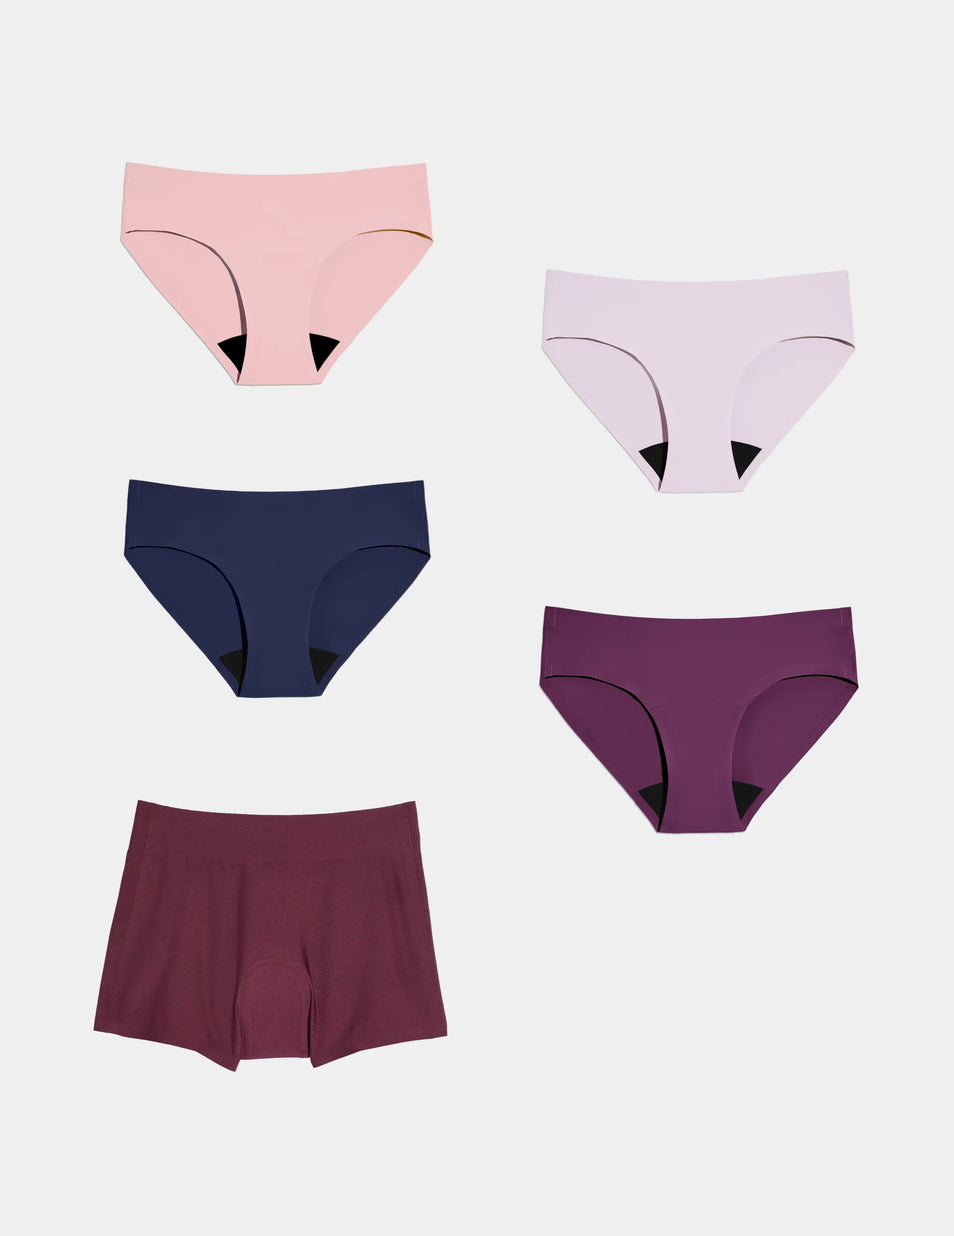 Buy Seamless Athletic Boyshorts Underwear Online – Knix - Knix